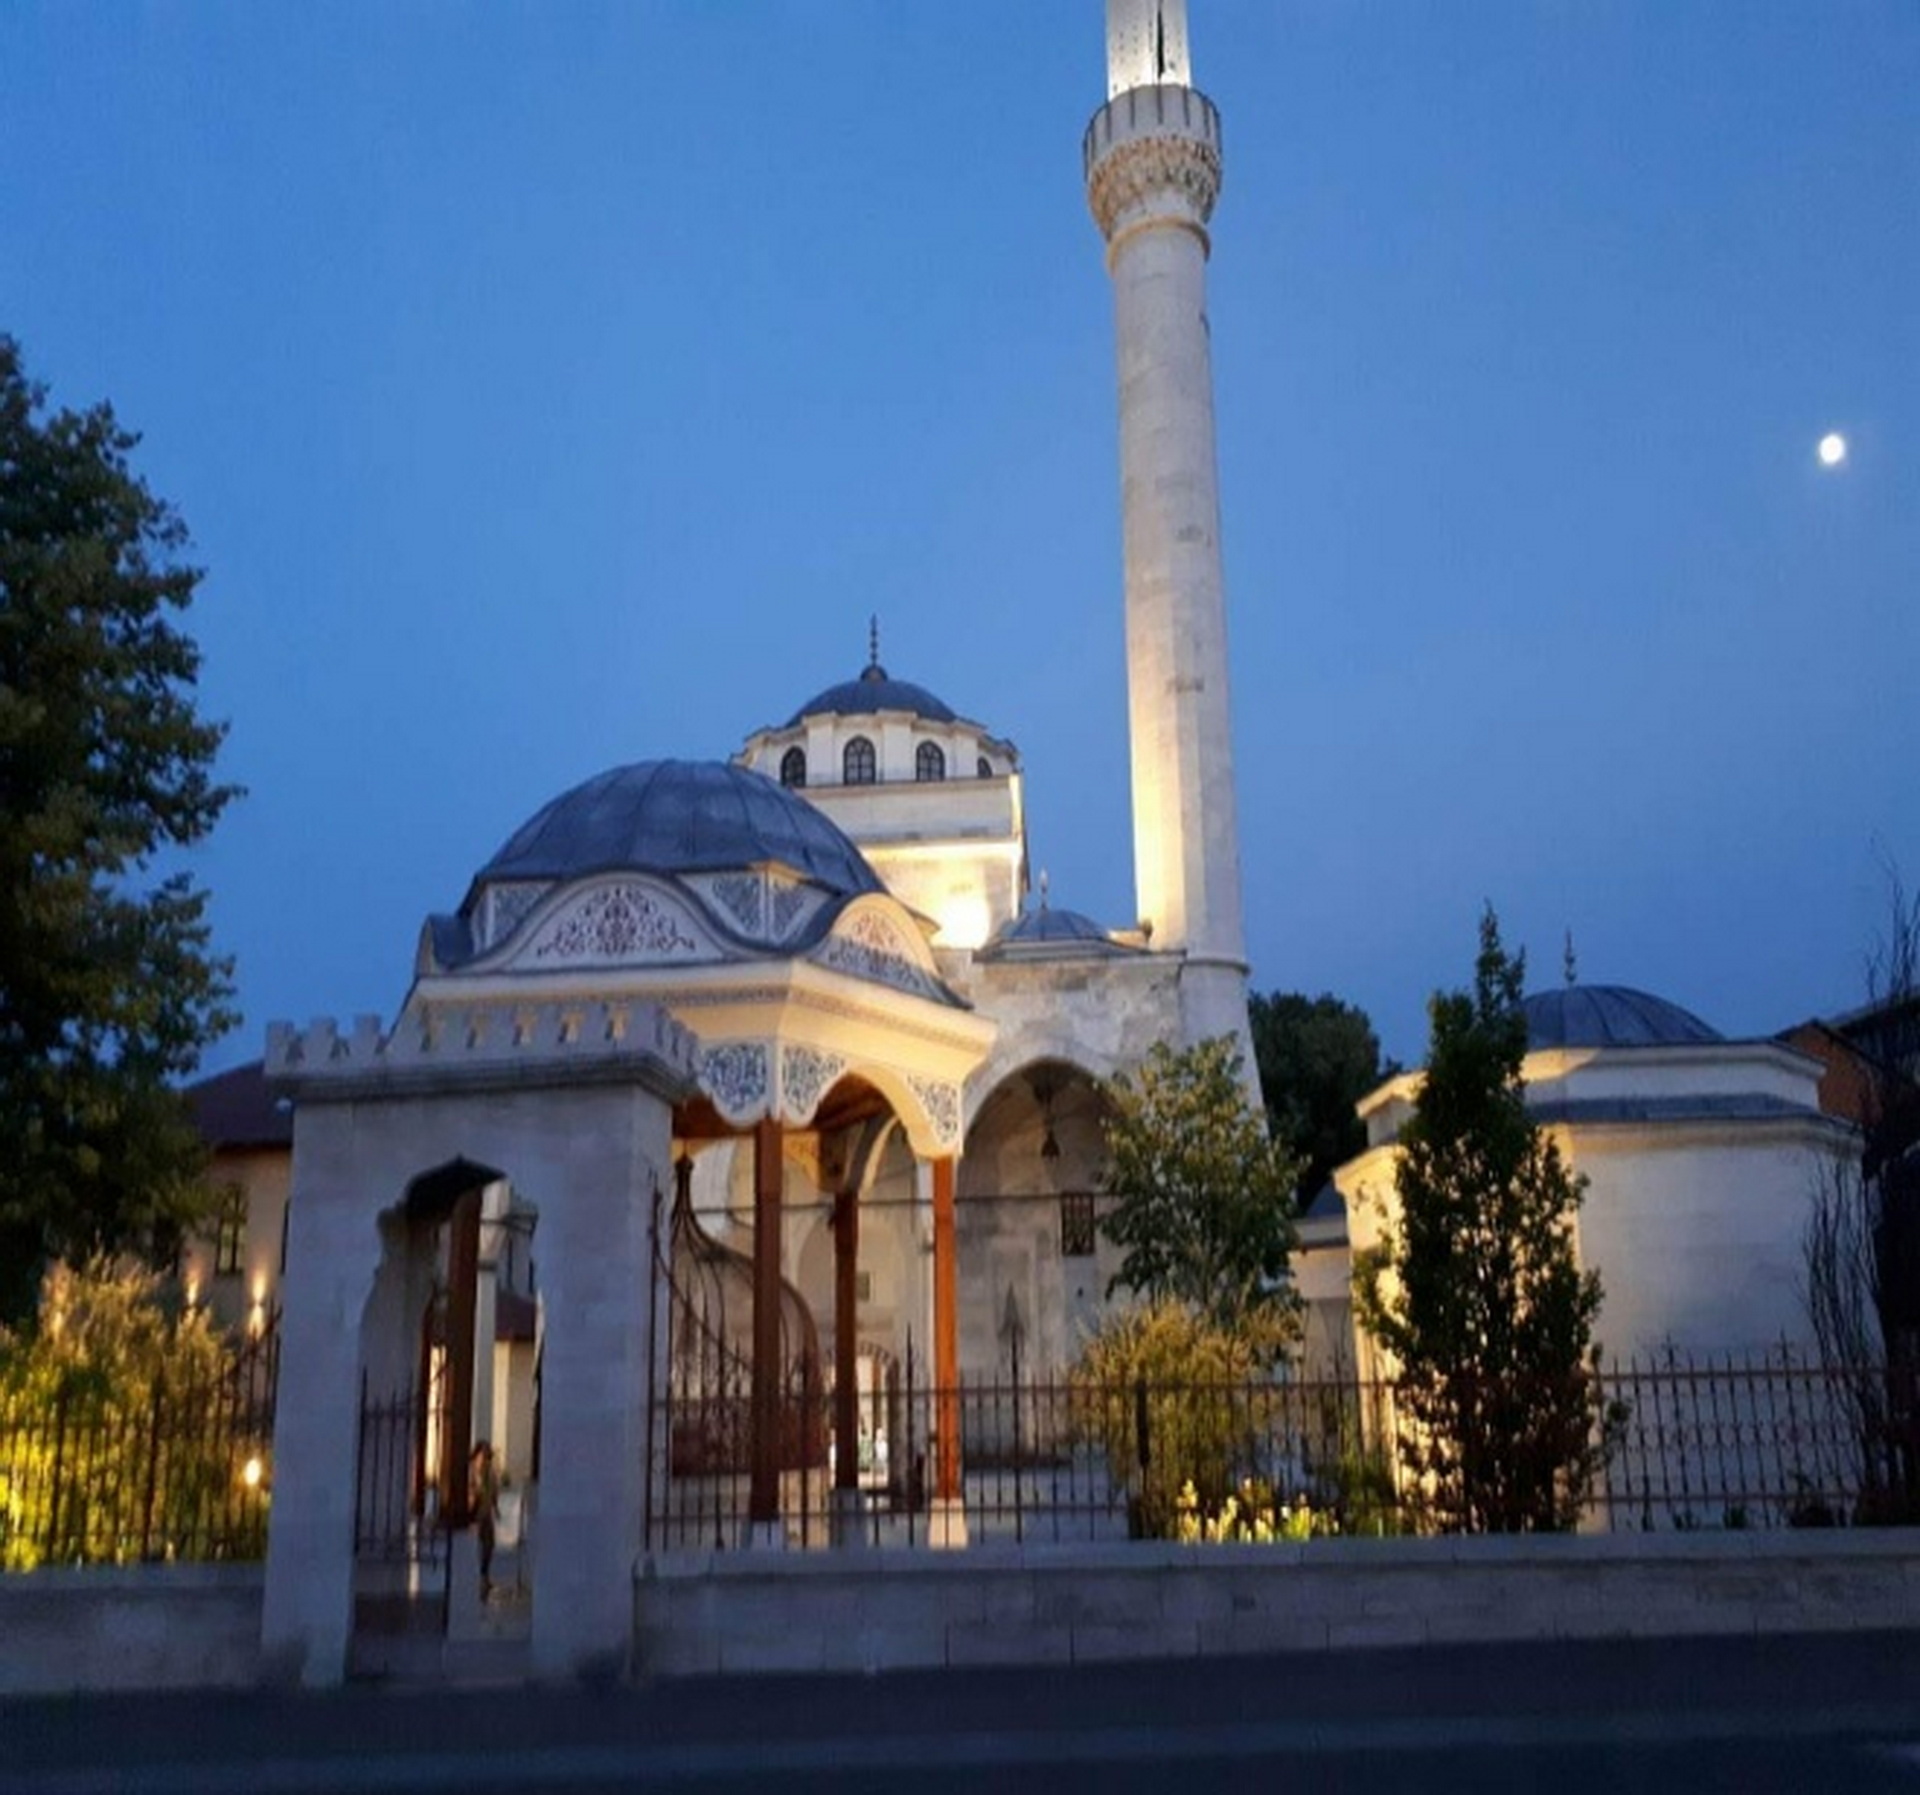 Restoration of the Ferhat Pasha Mosque